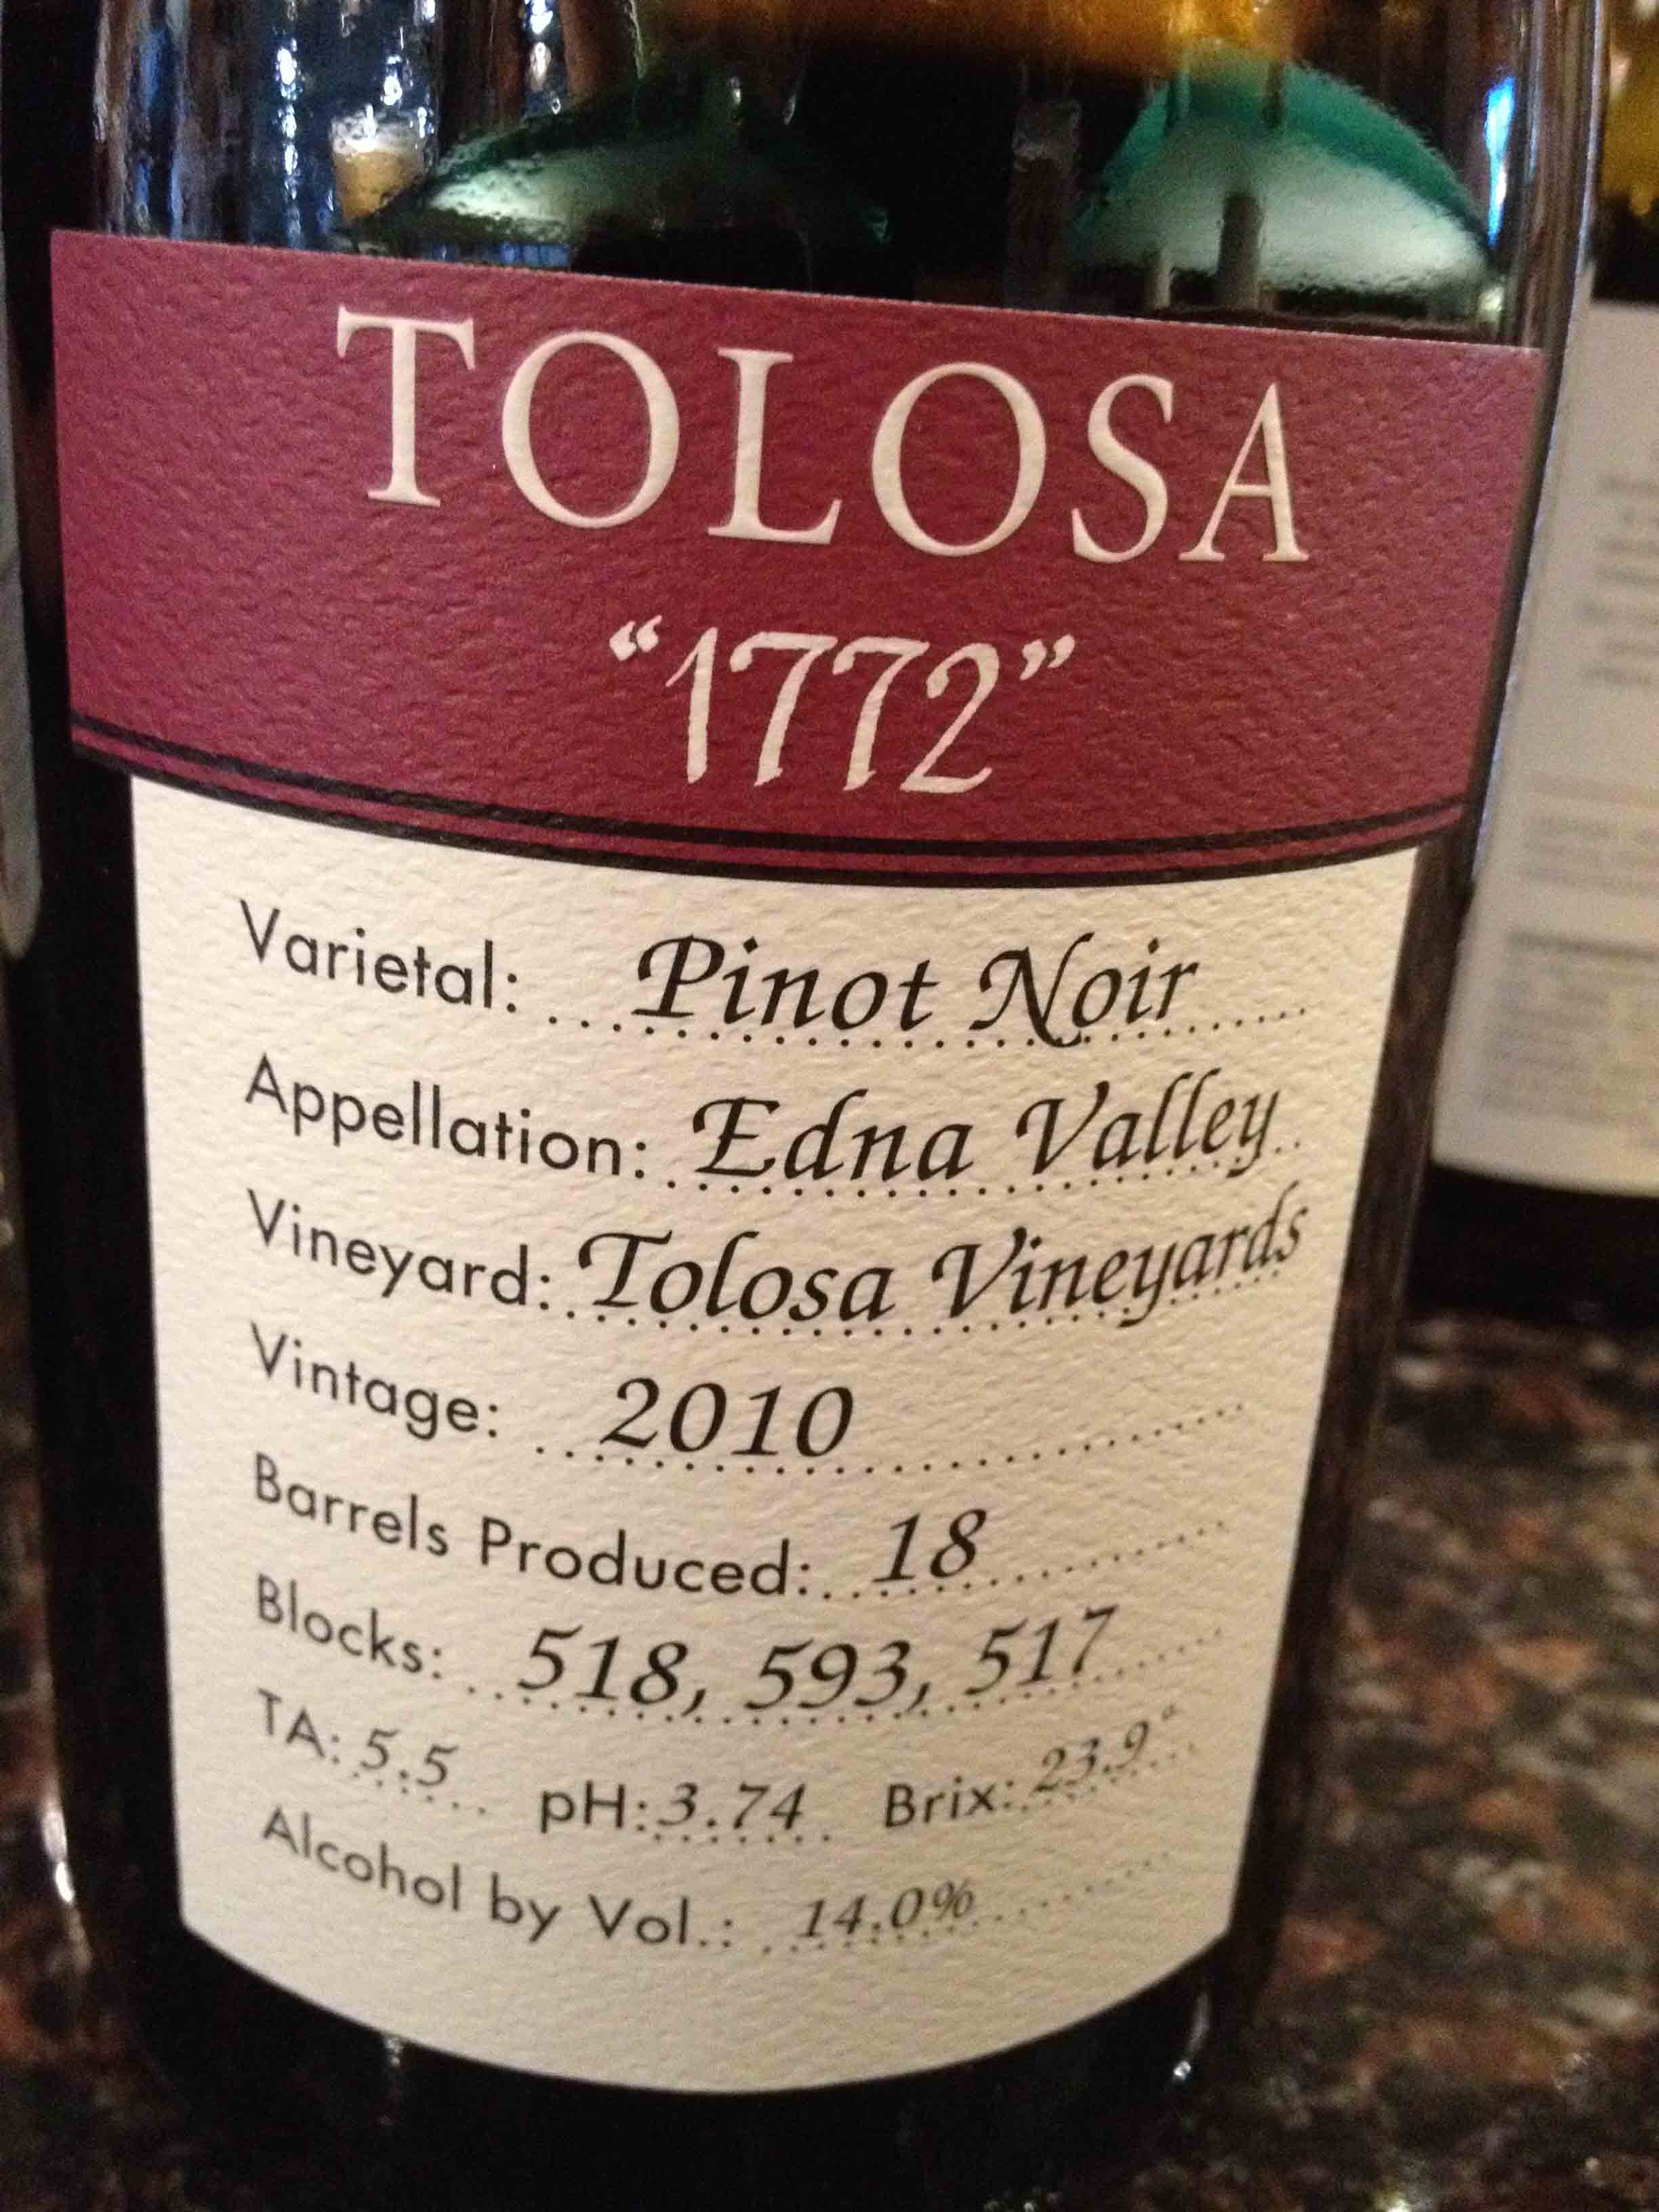 TOLOSA – « 1772 » Pinot Noir 2010 – Edna Valley – South Coast